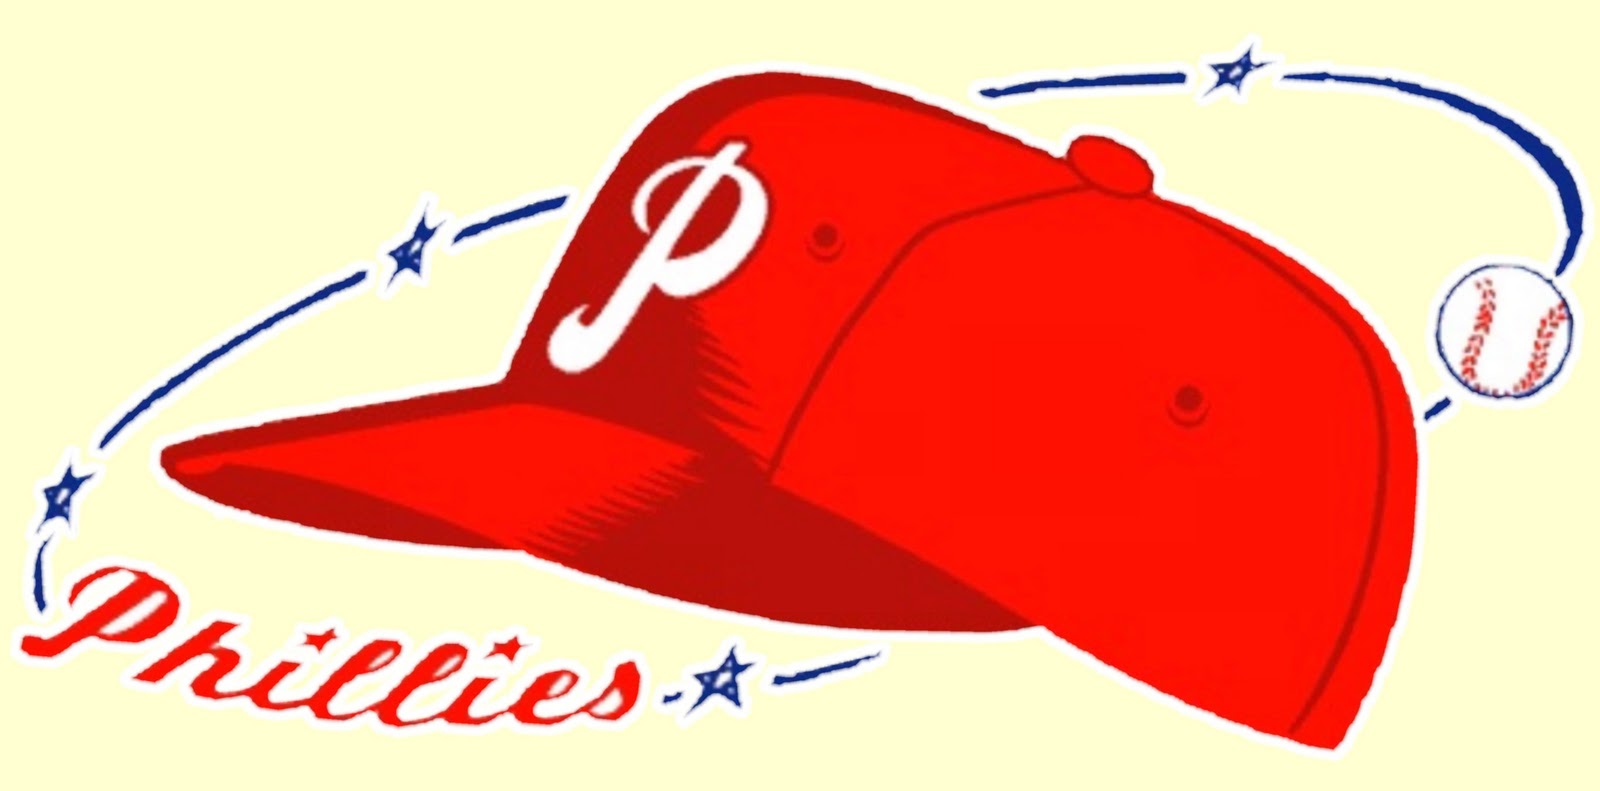 Phillies Logo httpthephilliesroomblogspotcom2011011953 topps